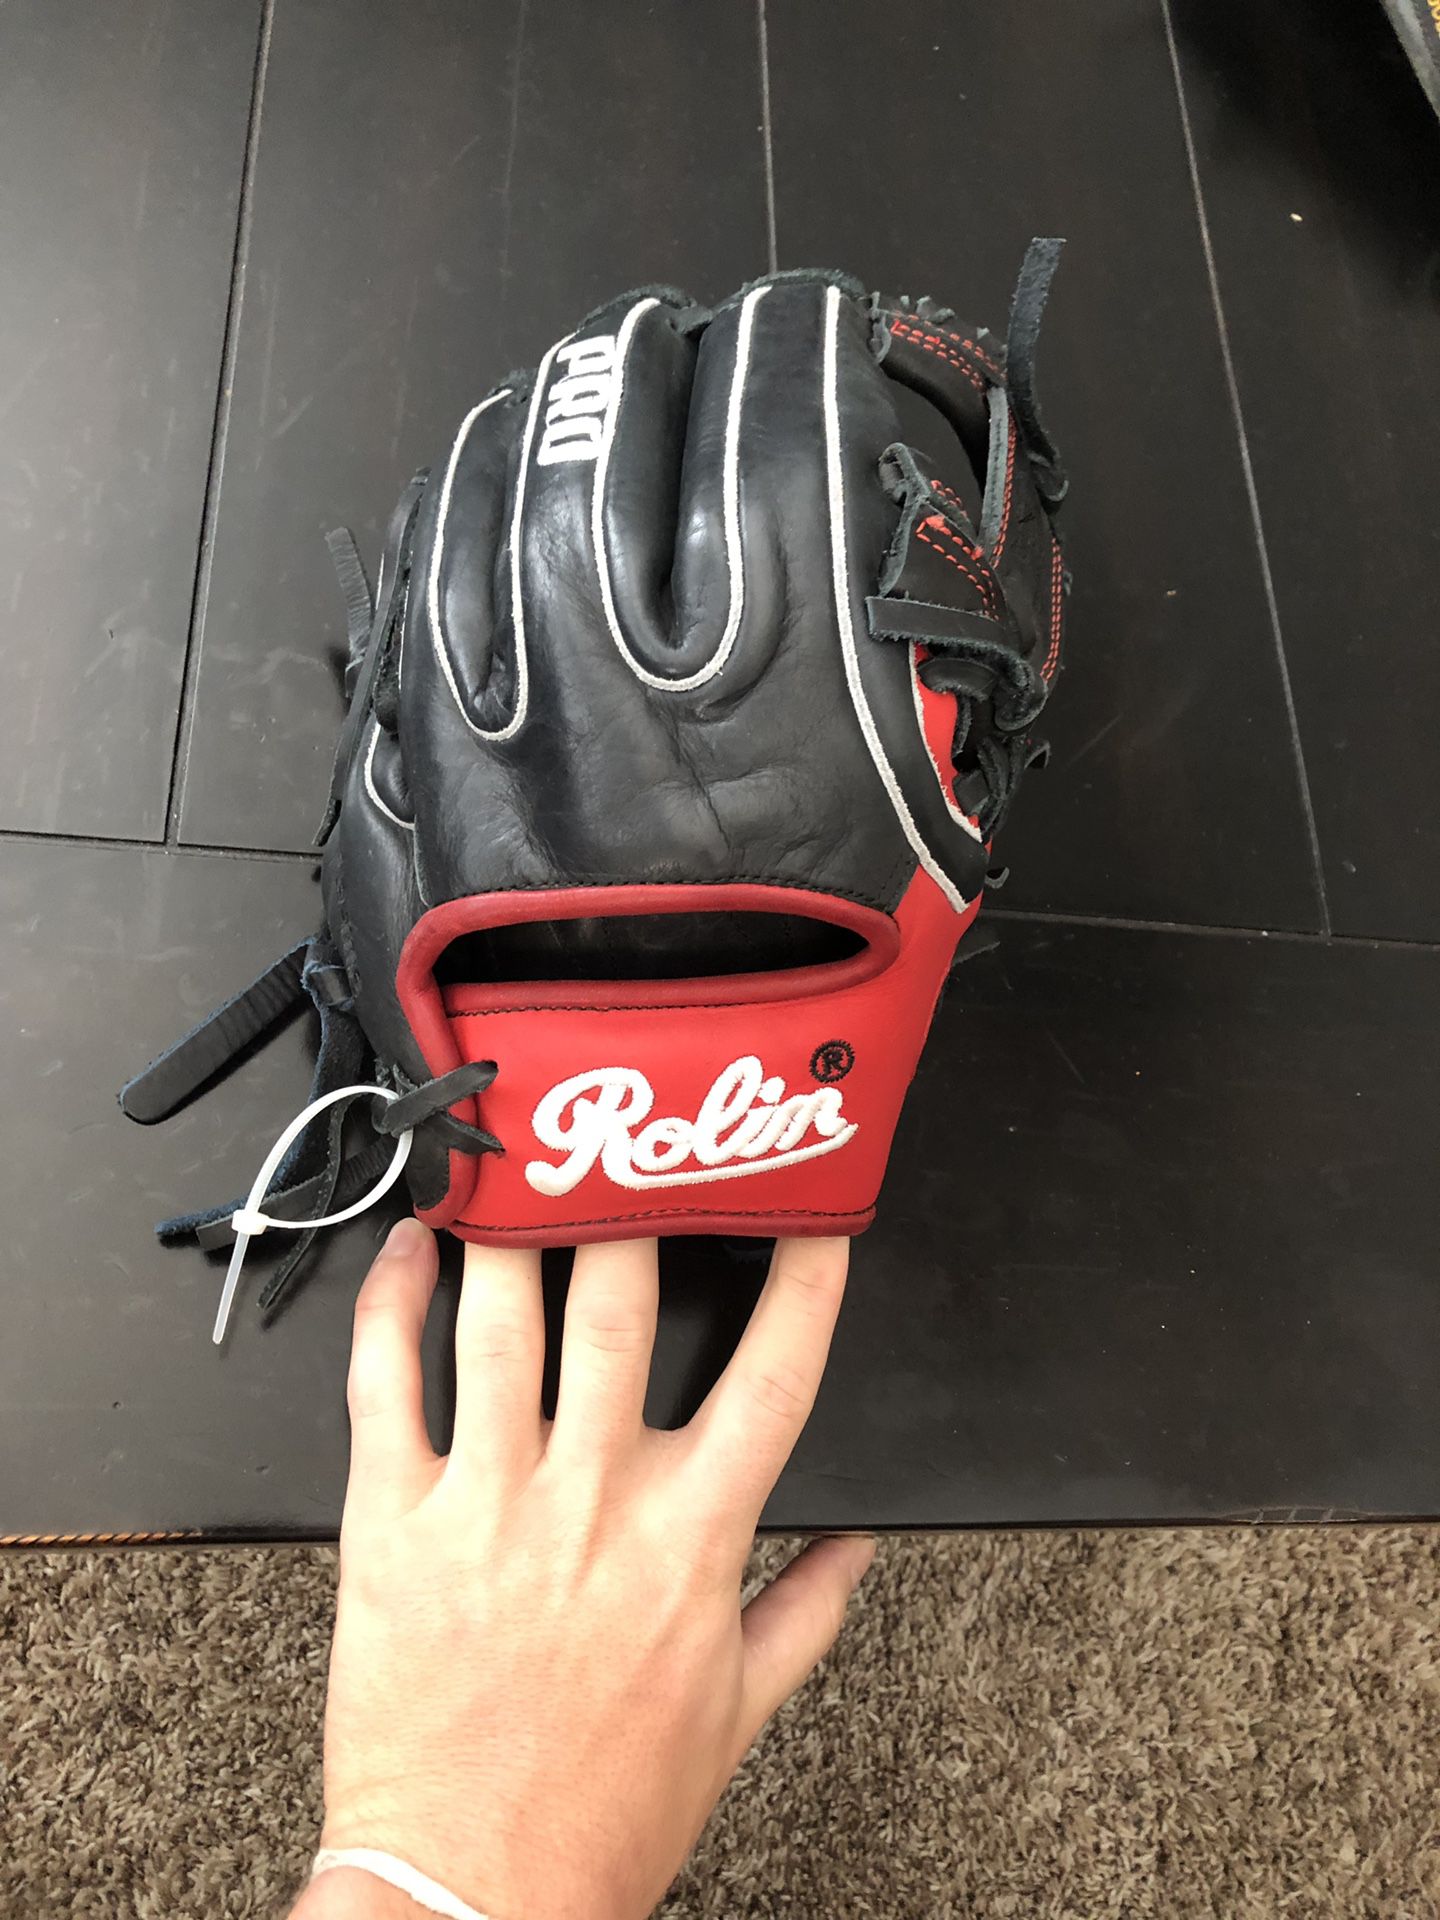 Brand new Pro Rolin baseball glove